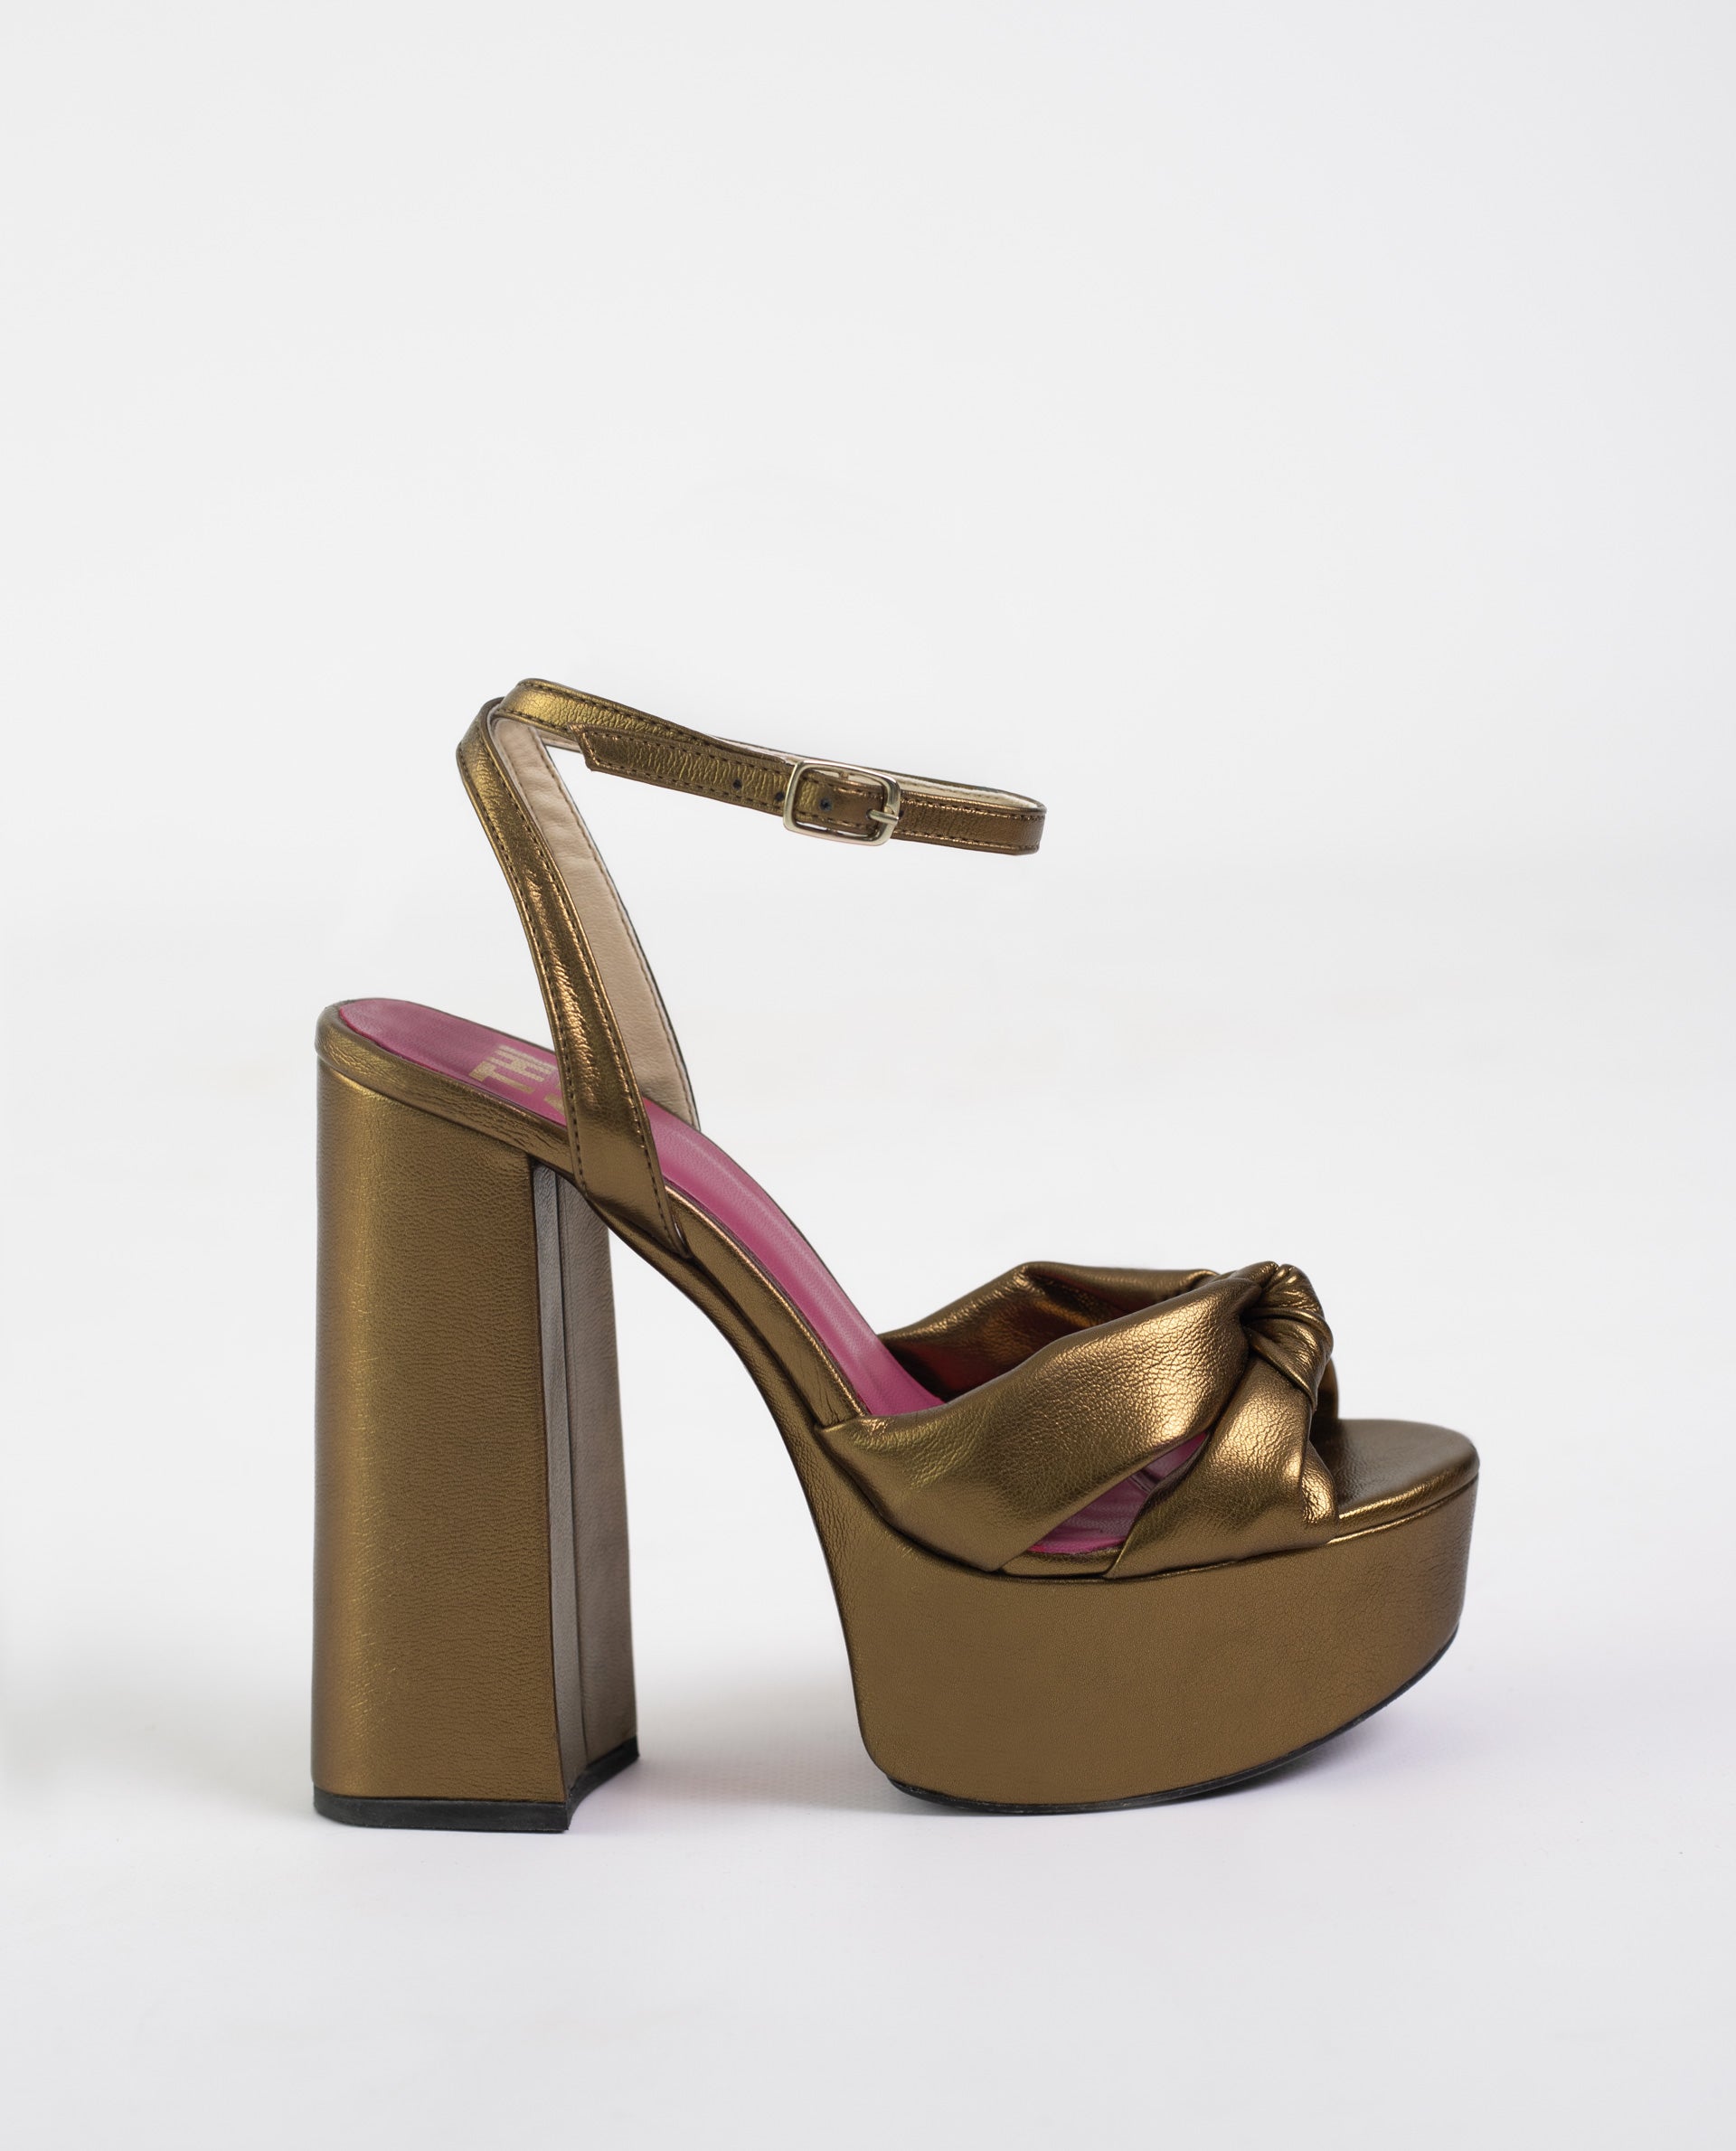 Buy MOSAC Women Wedding Bridal Fashion Heel Sandal (Copper, 3) at Amazon.in